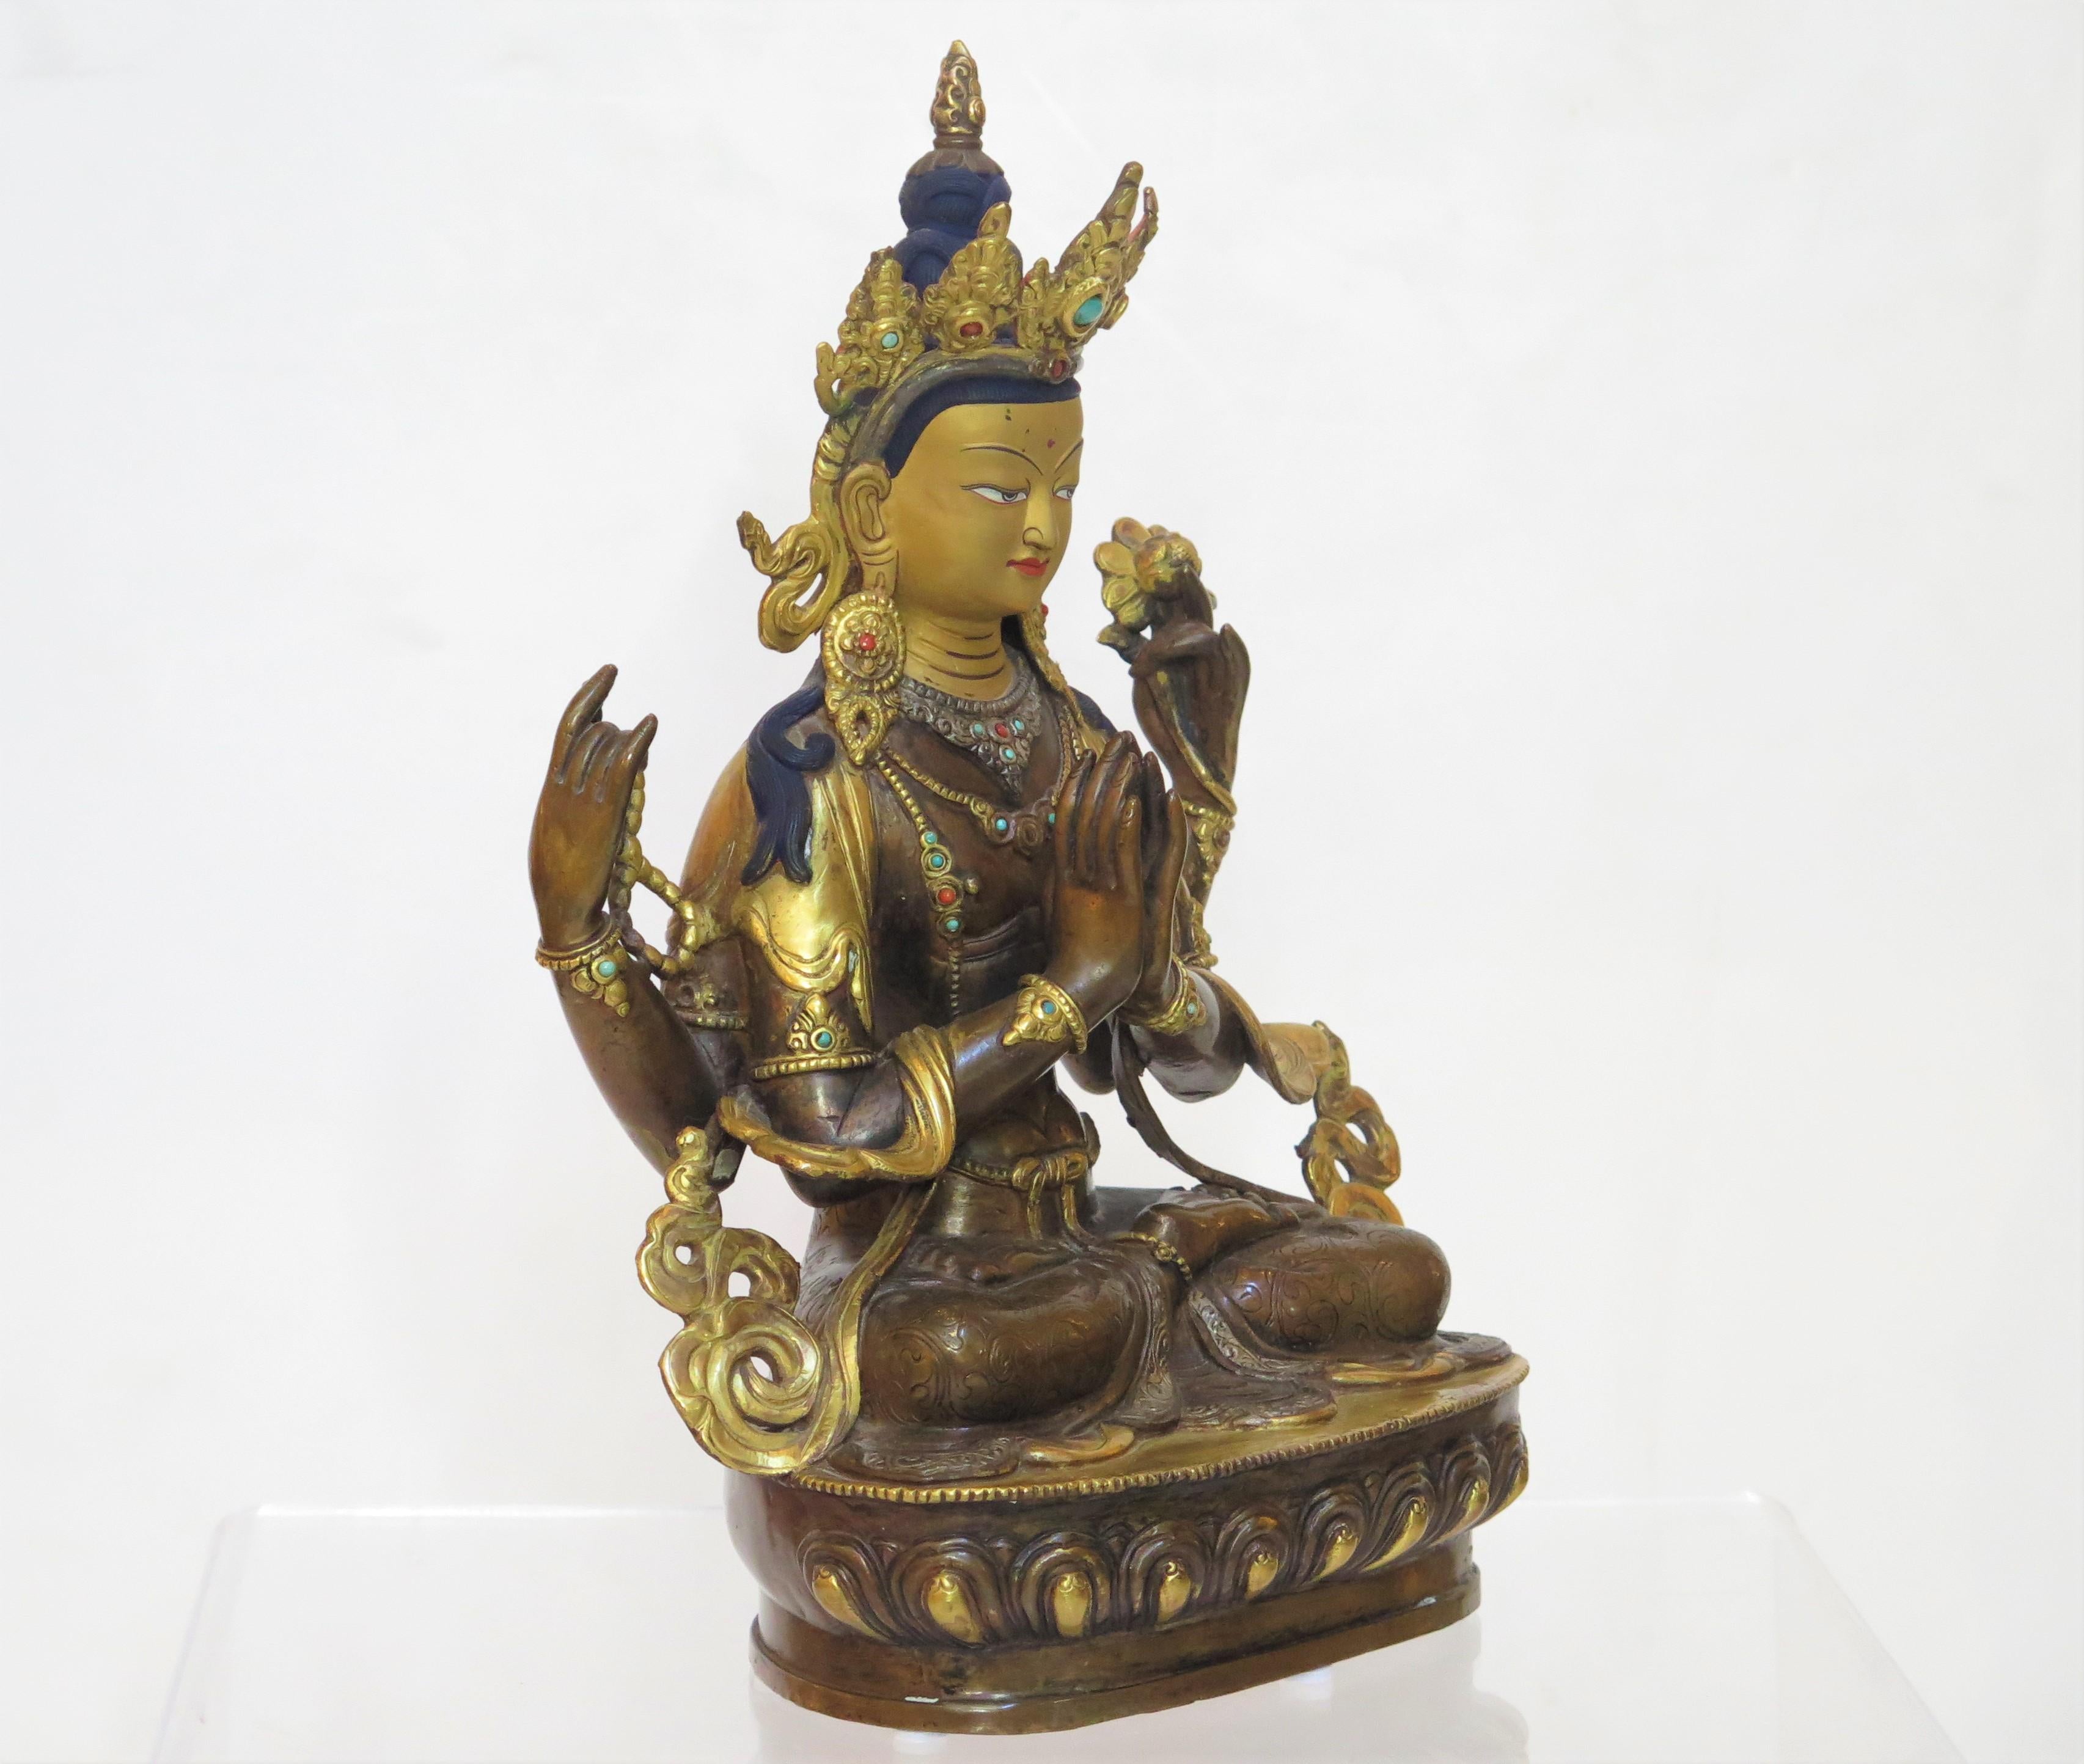 mid-20th century Tibetan Buddhist Deity Chenrezig (Four-Armed Avalokiteshvara), gilt metal / brass with blue hair, red inside of crown.

Chenrezig Bodhisattva, also known as Avalokitesvara, 